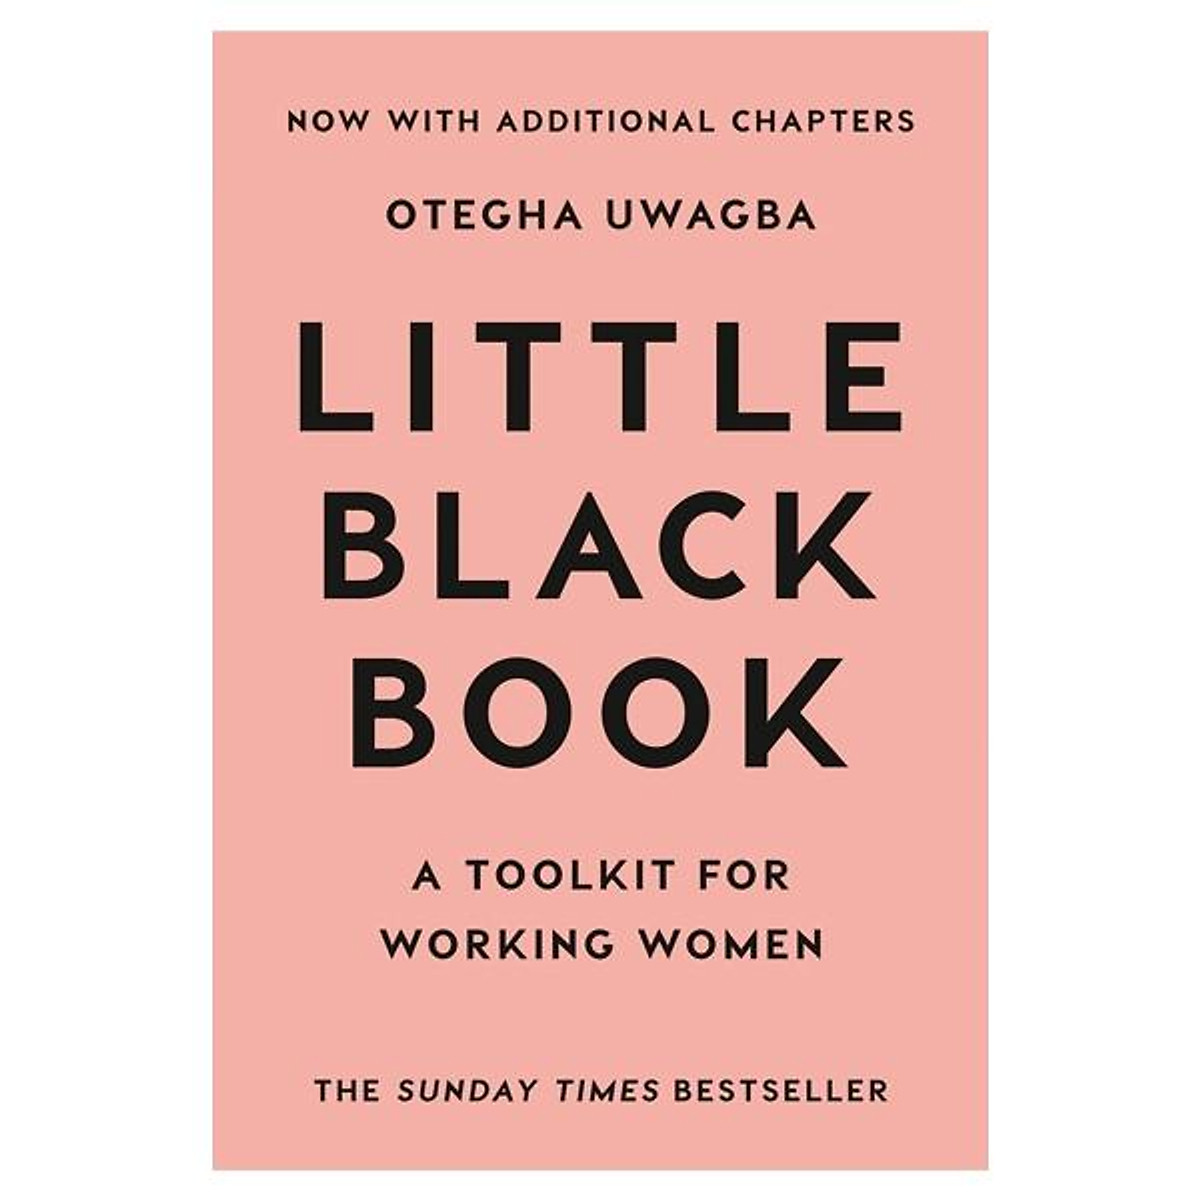 THE LITTLE BLACK BOOK